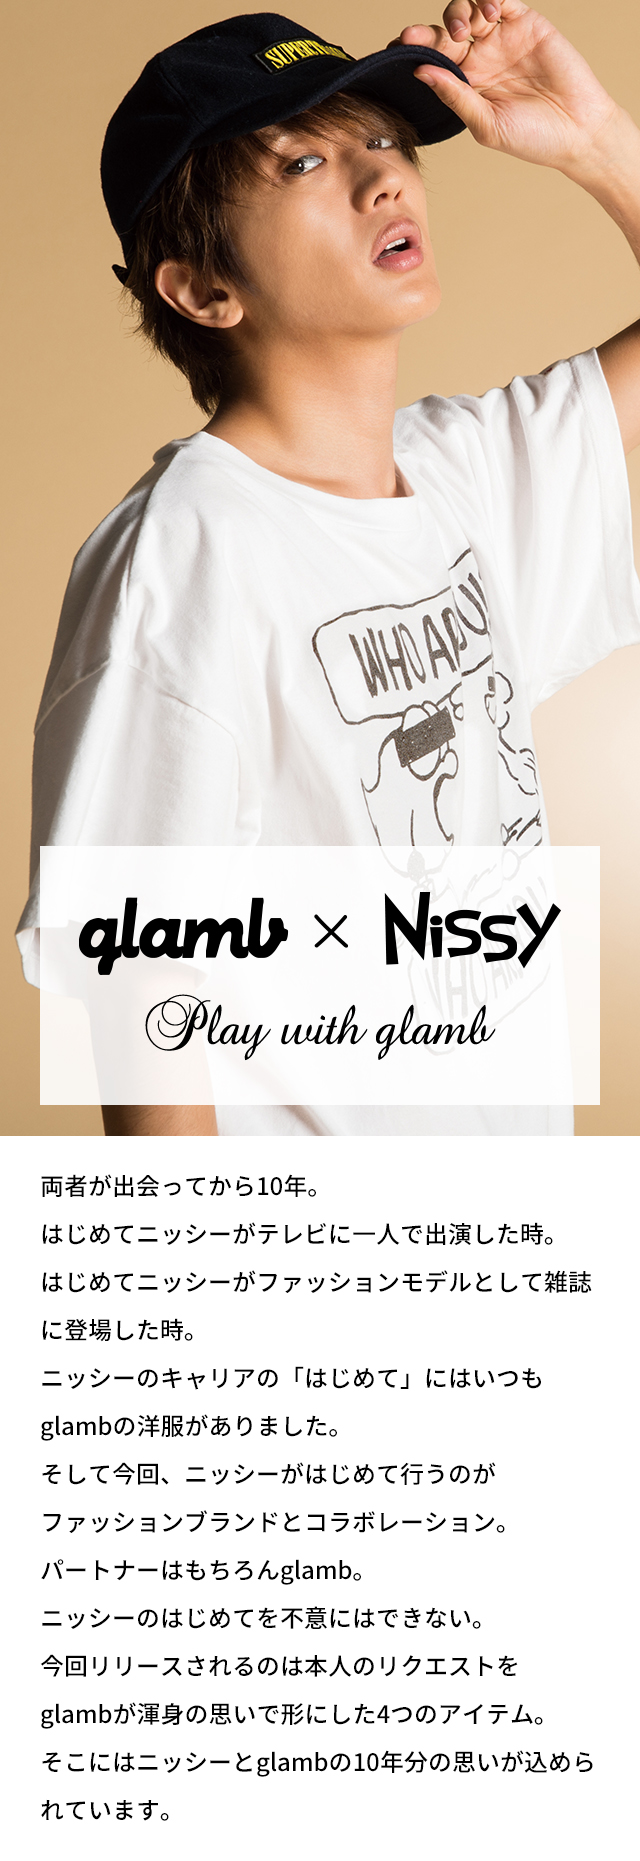 glamb×nissy